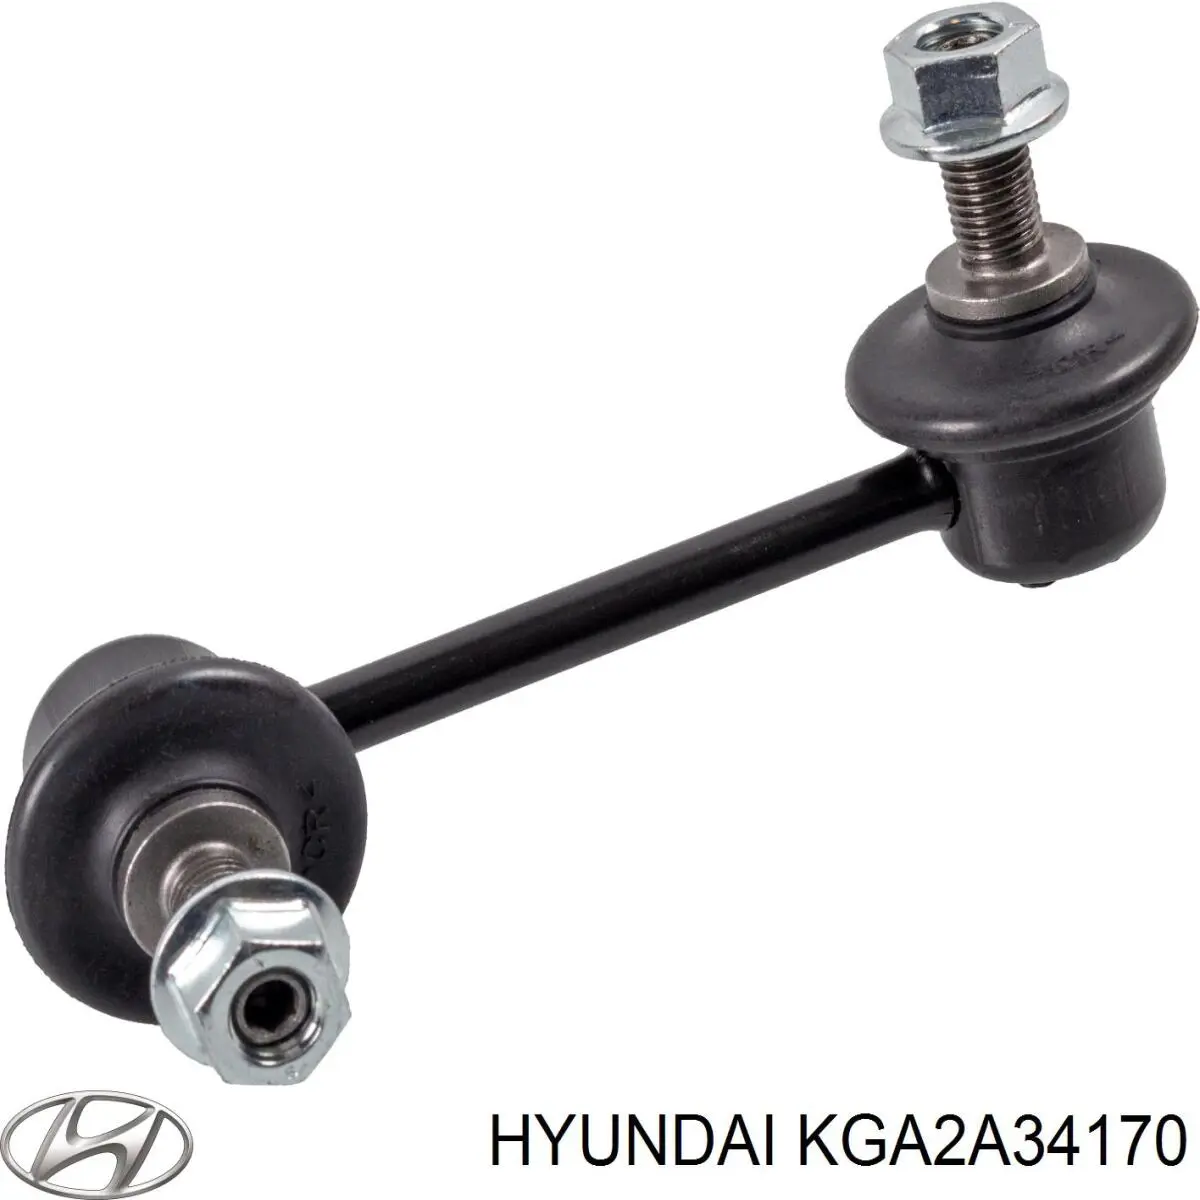 KGA2A34170 Hyundai/Kia barra estabilizadora delantera izquierda